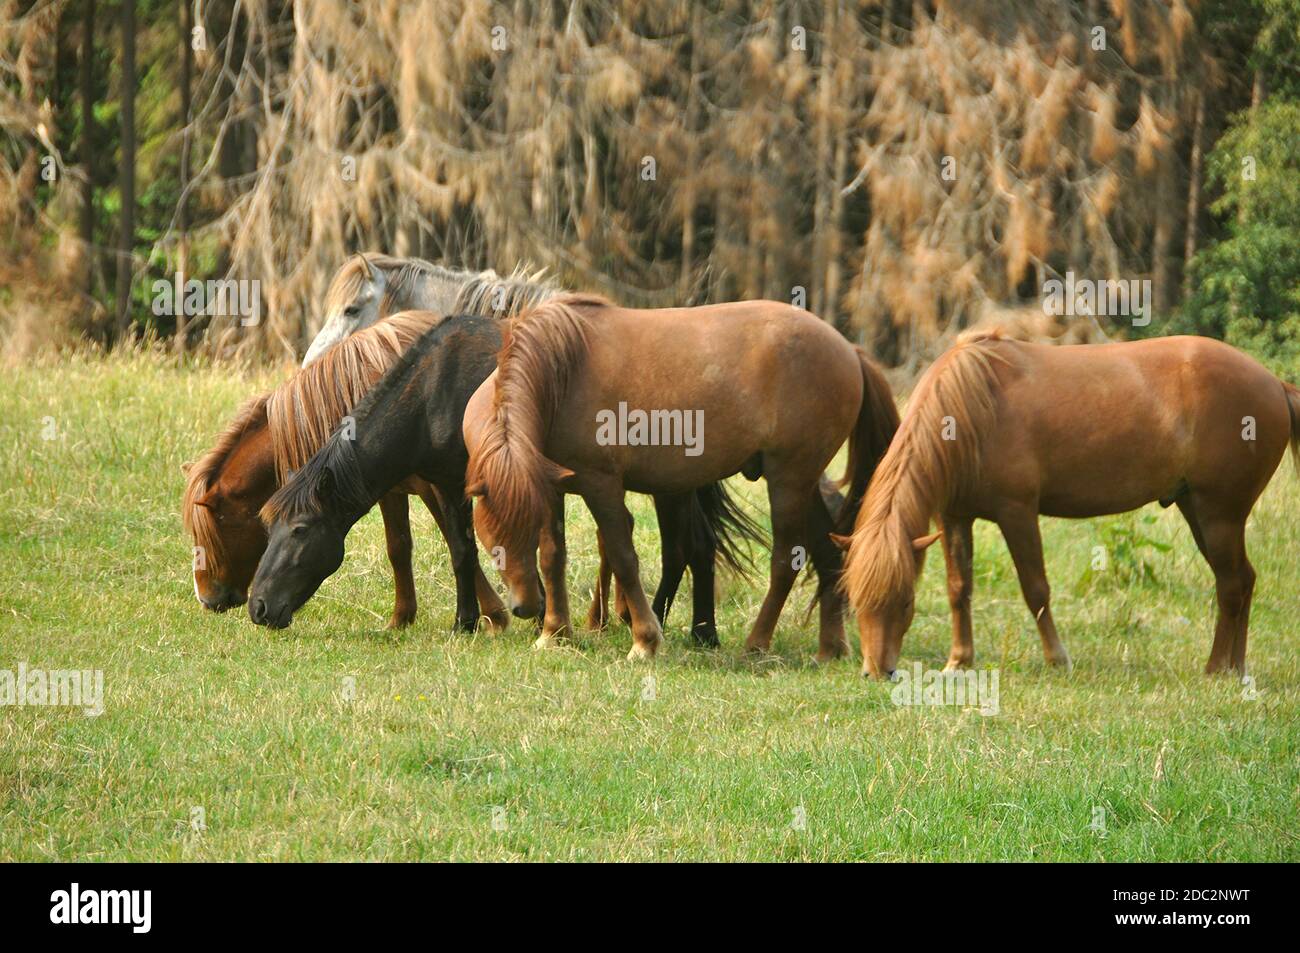 horse Stock Photo